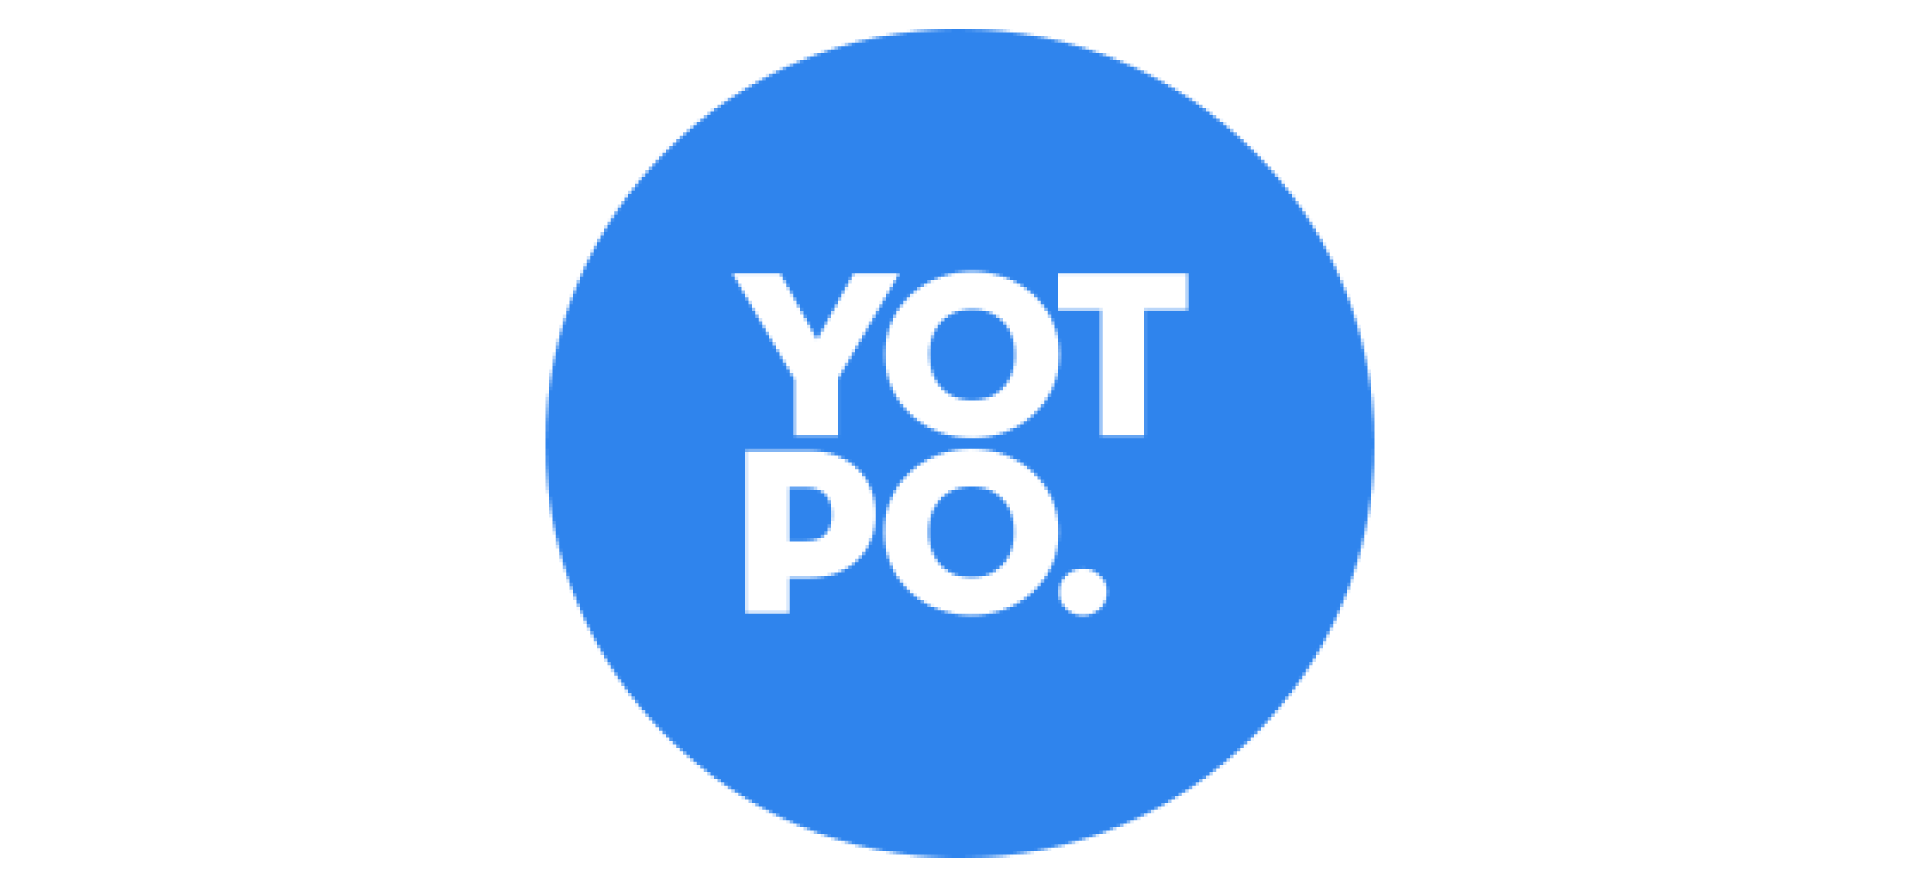 Yotpo.png